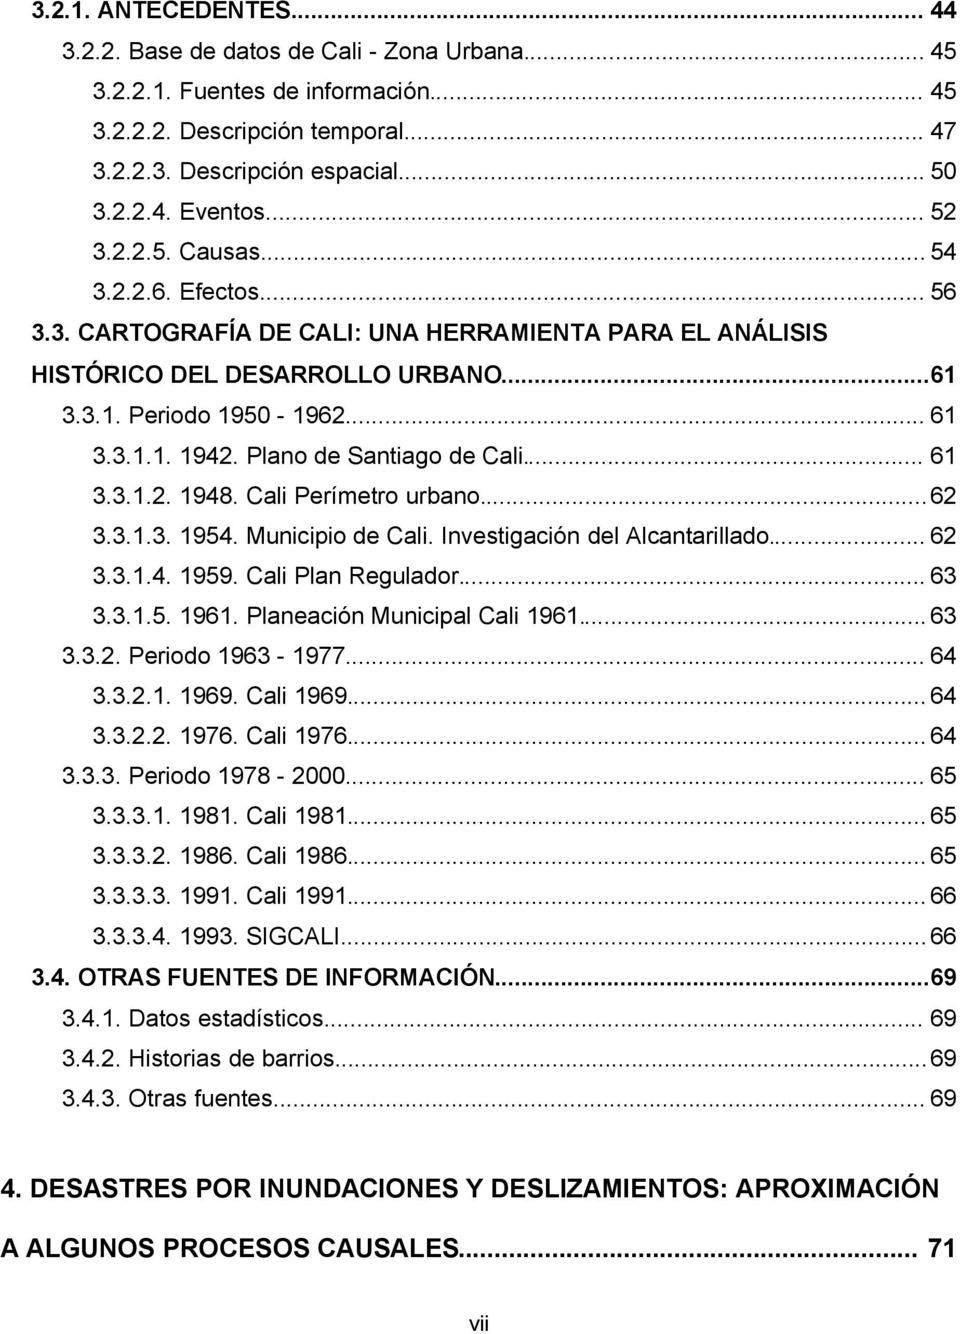 Plano de Santiago de Cali... 61 3.3.1.2. 1948. Cali Perímetro urbano... 62 3.3.1.3. 1954. Municipio de Cali. Investigación del Alcantarillado... 62 3.3.1.4. 1959. Cali Plan Regulador... 63 3.3.1.5. 1961.